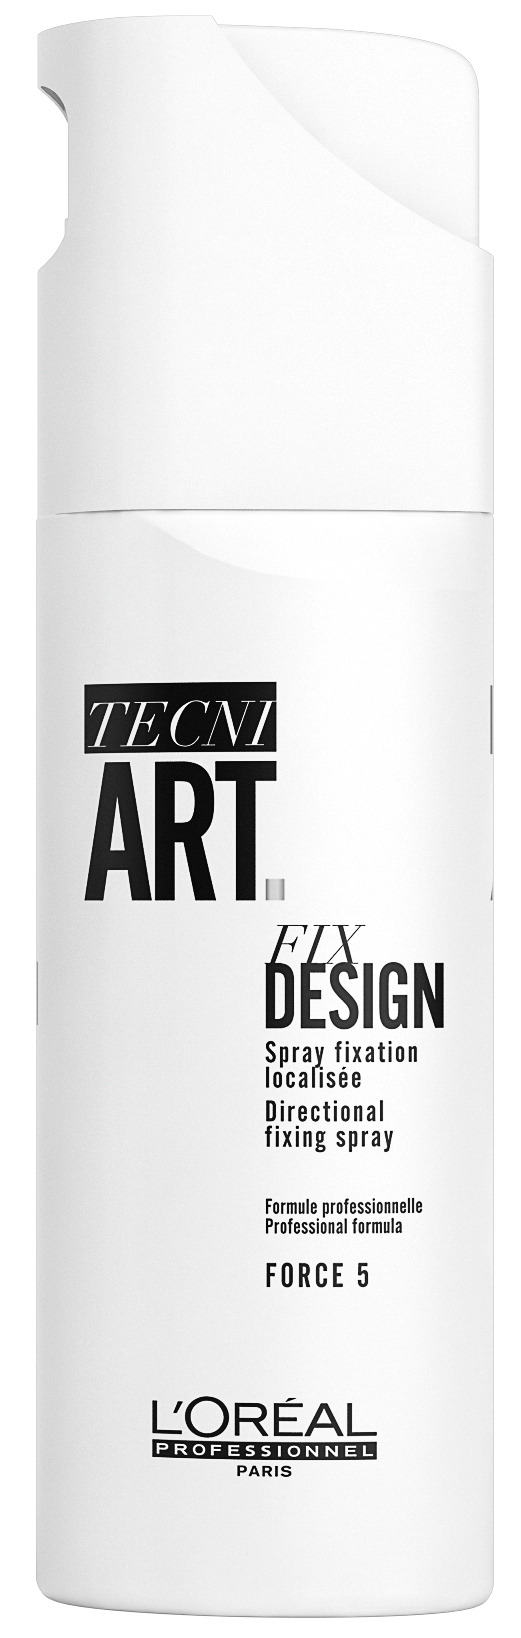 Tecni art Fix Design Spray